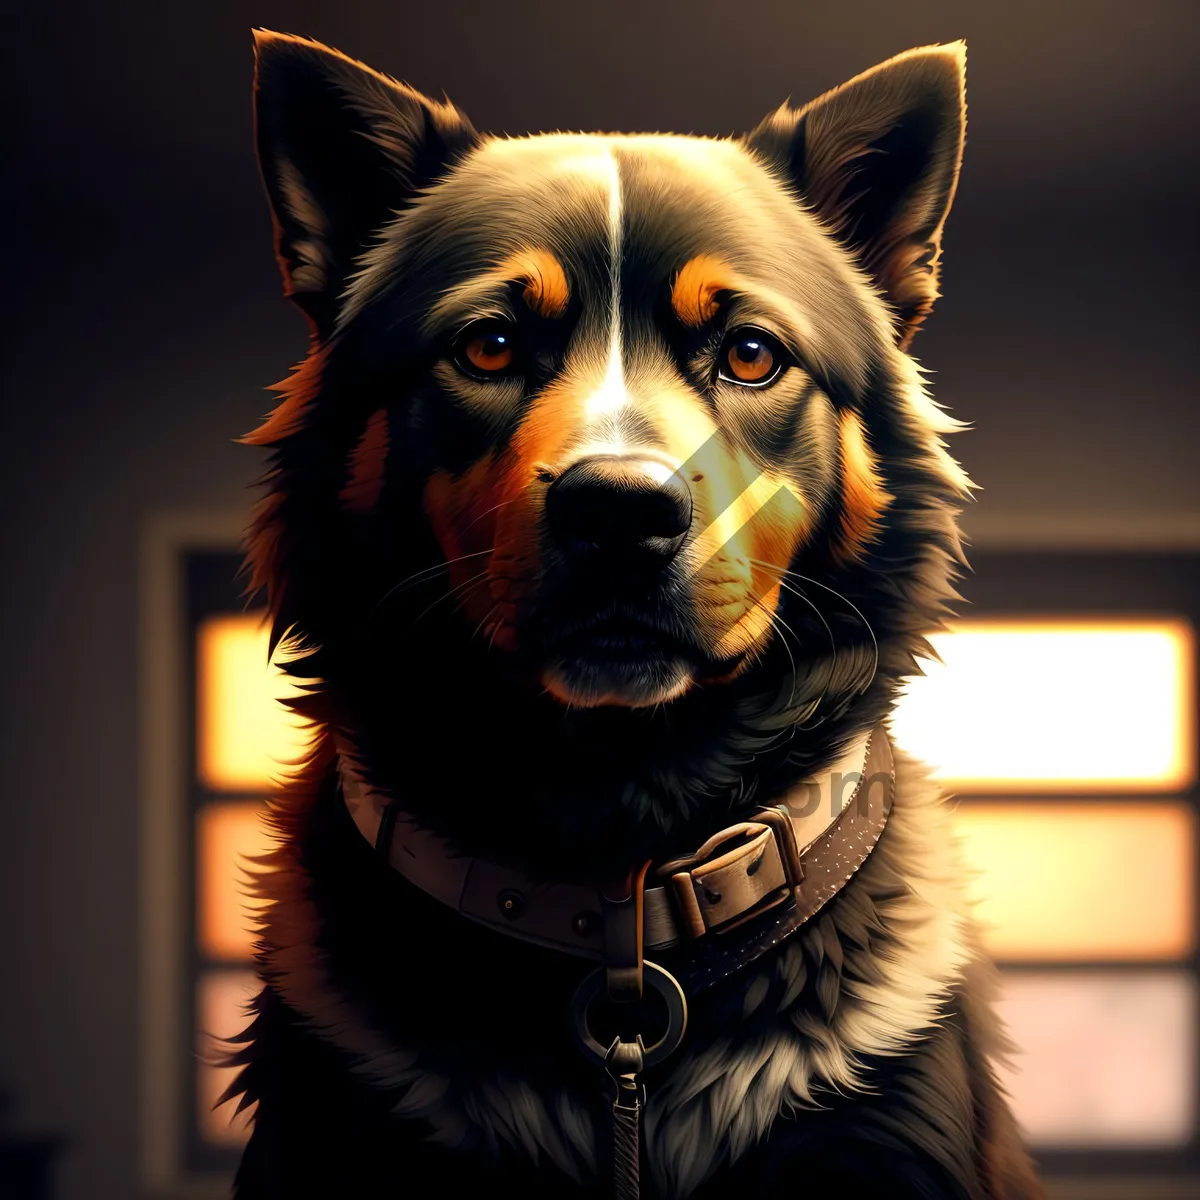 Picture of Adorable Border Collie Dog Portrait